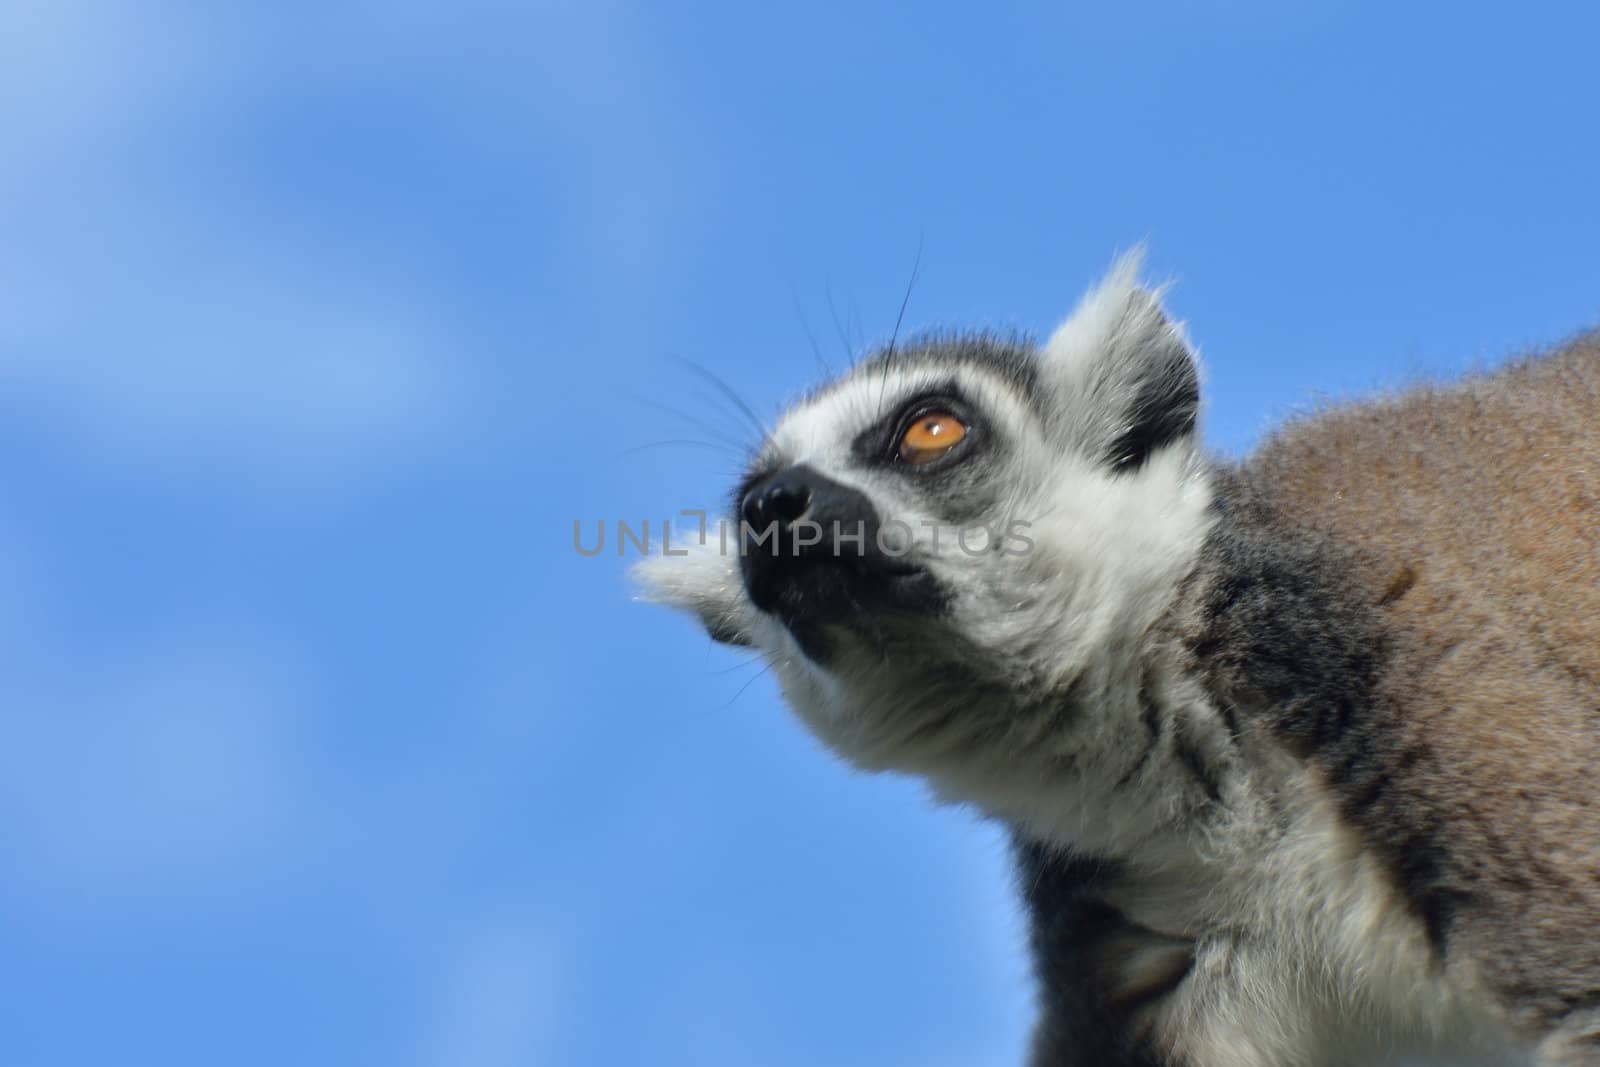 Lemur looking up by pauws99